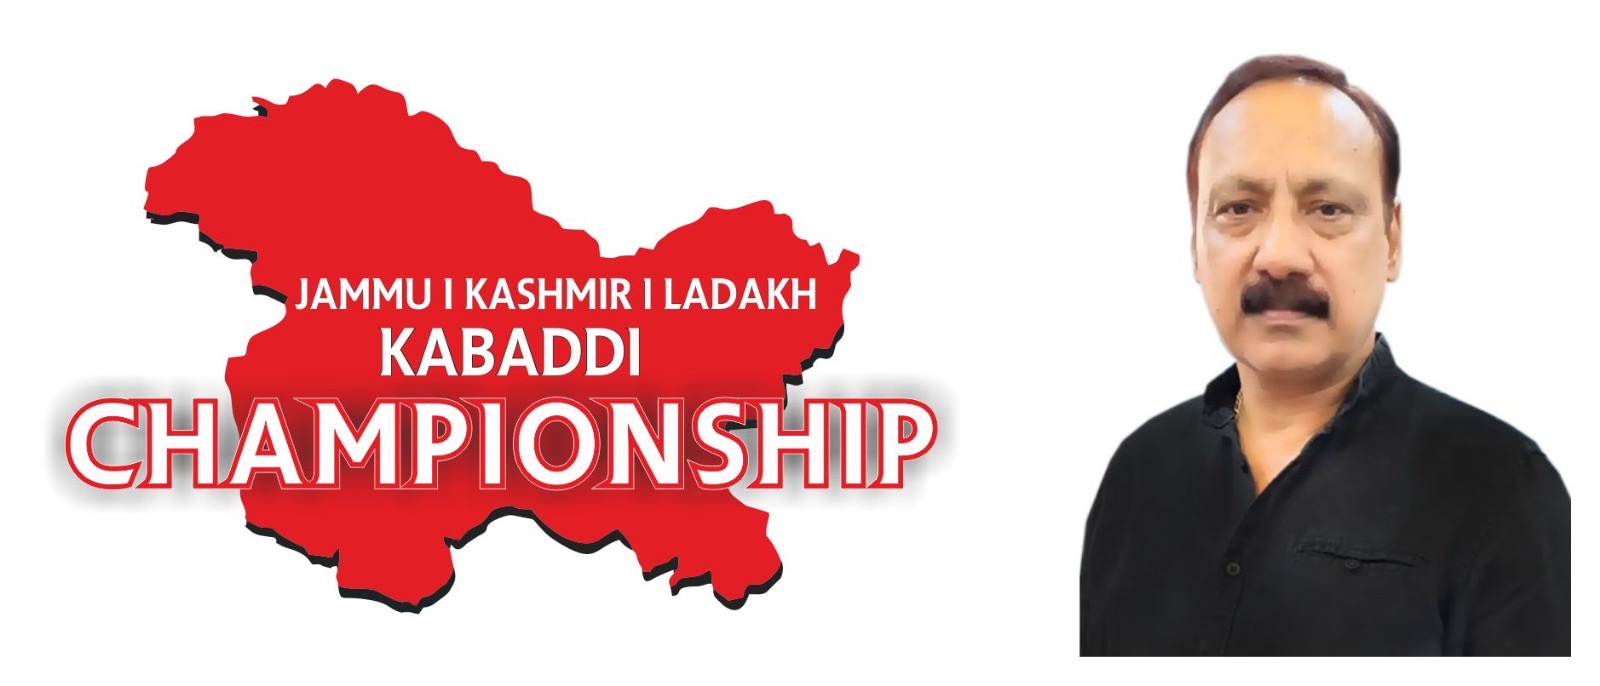  J&K Kabaddi Association will host Kabaddi Championship for Jammu & Kashmir and Ladakh